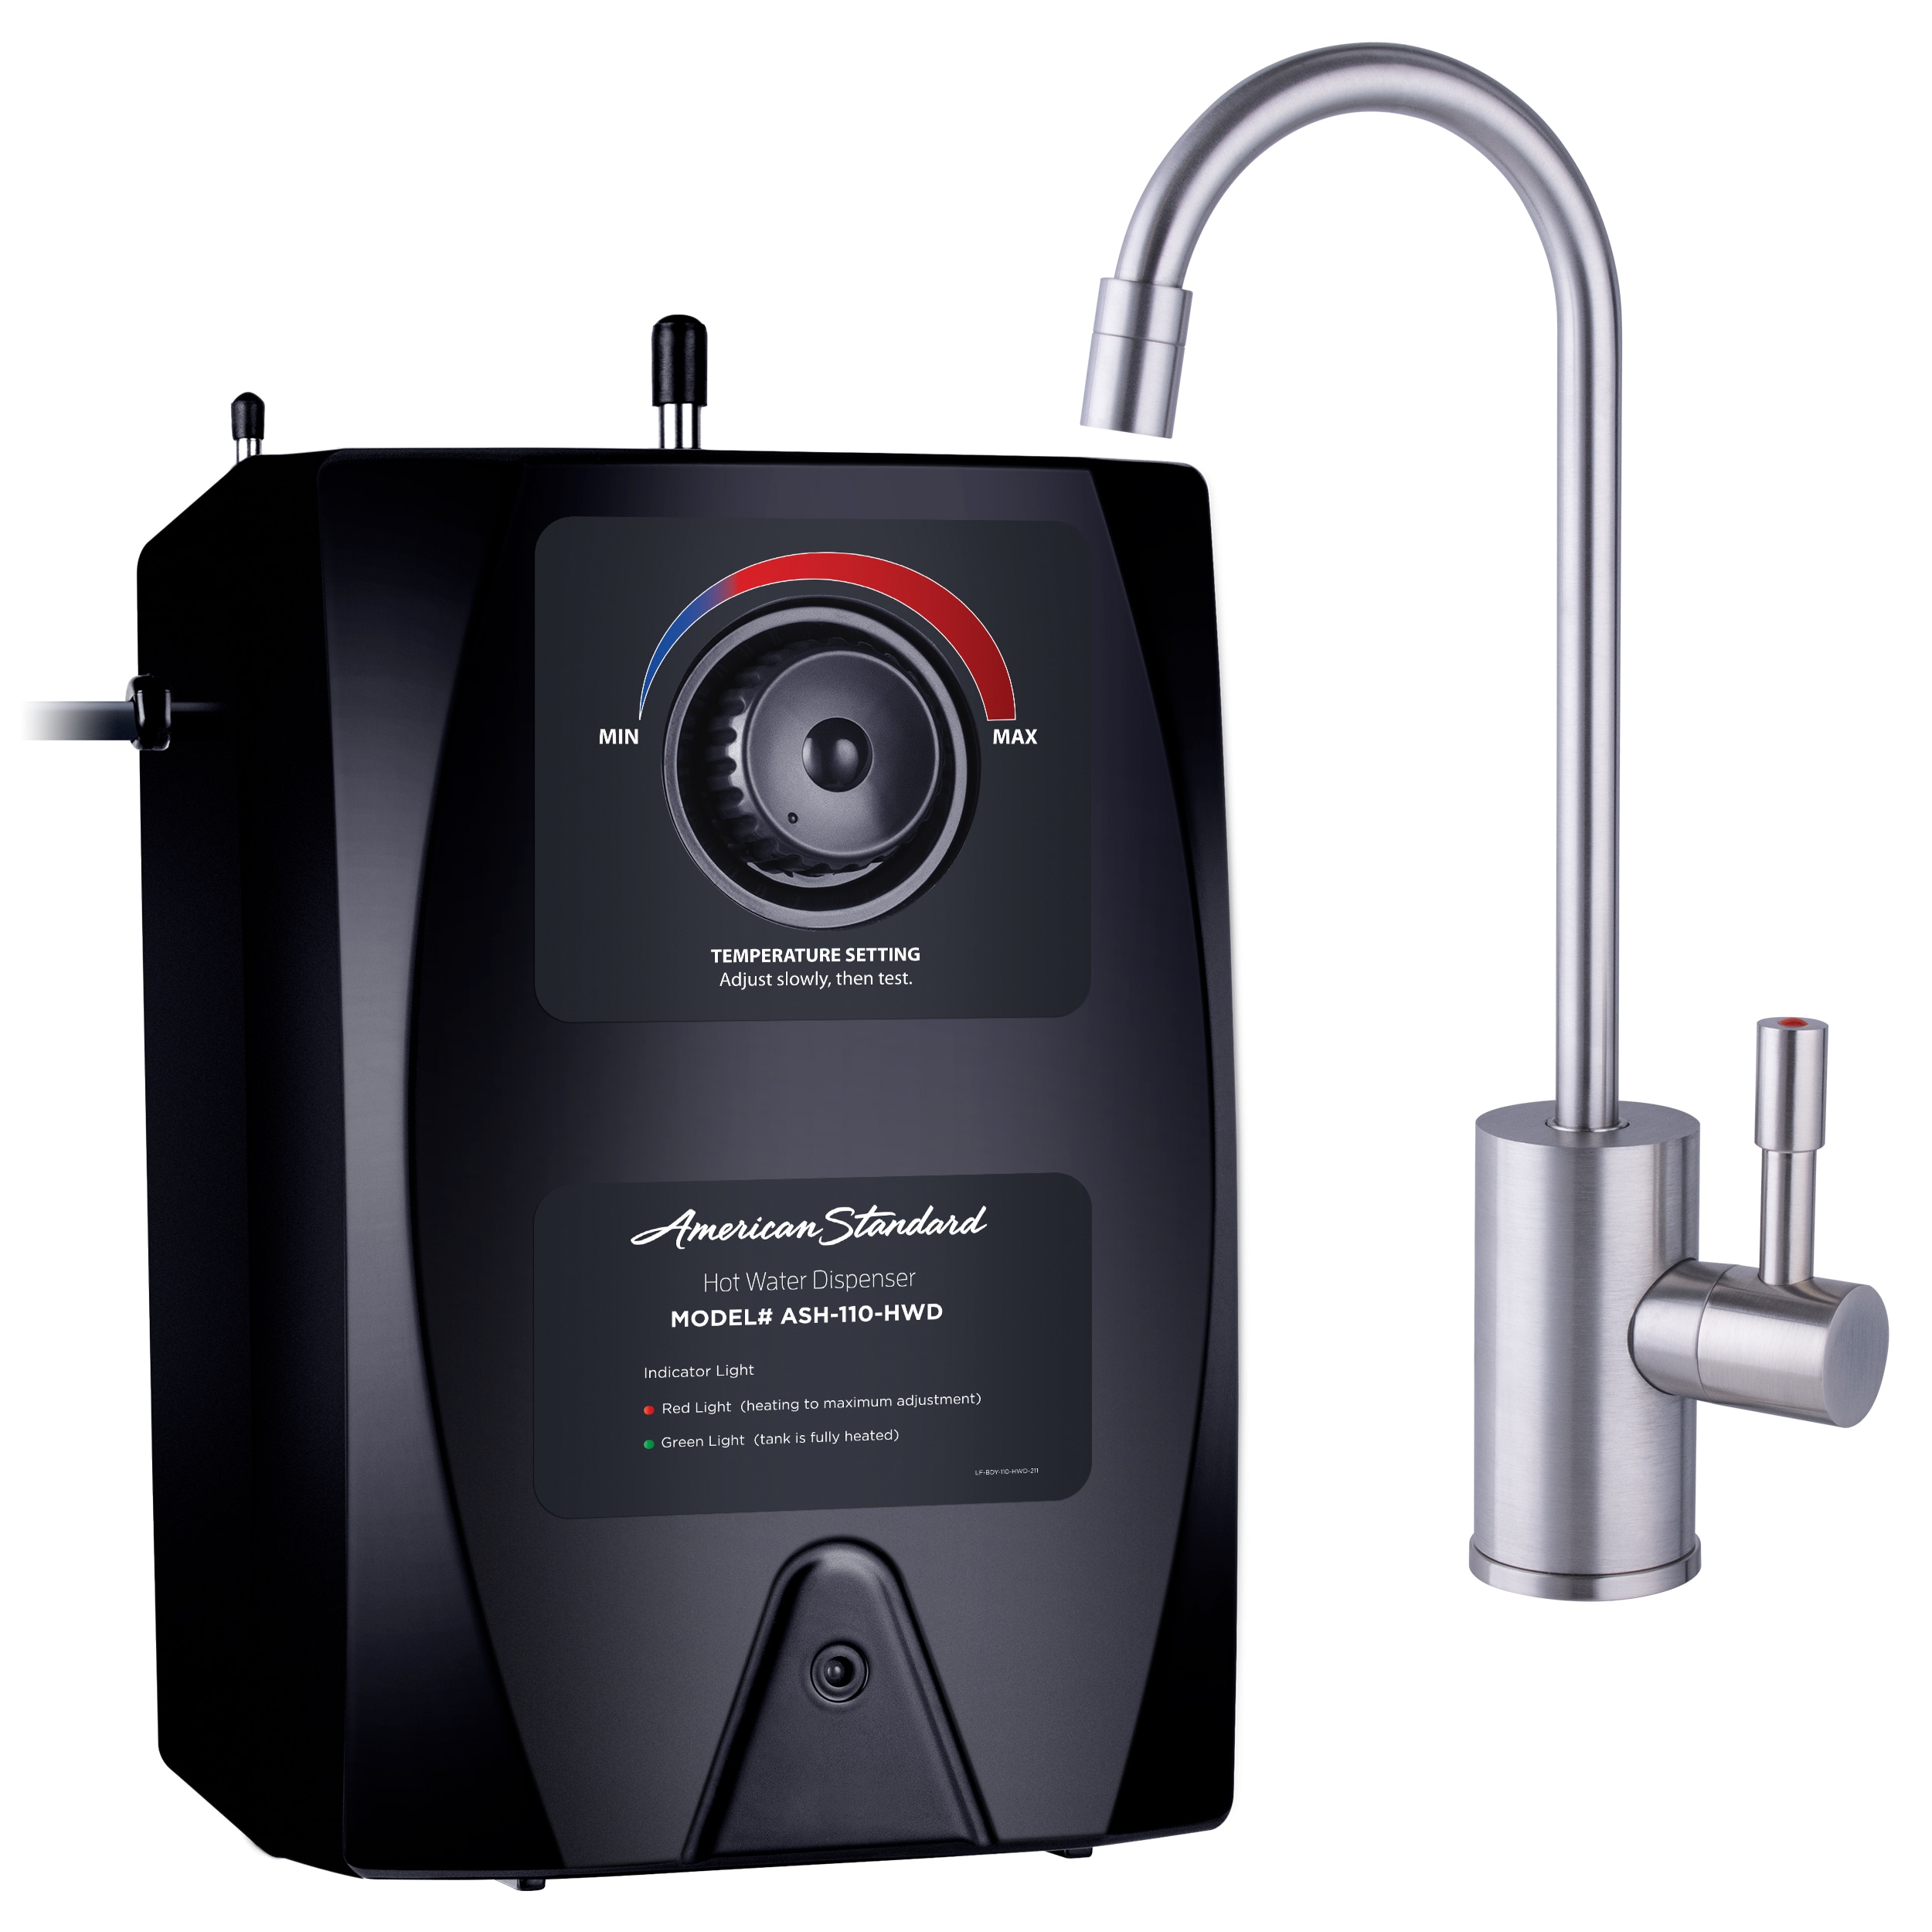 Instant Hot Water Dispenser - Hot Water Dispenser for Faucets